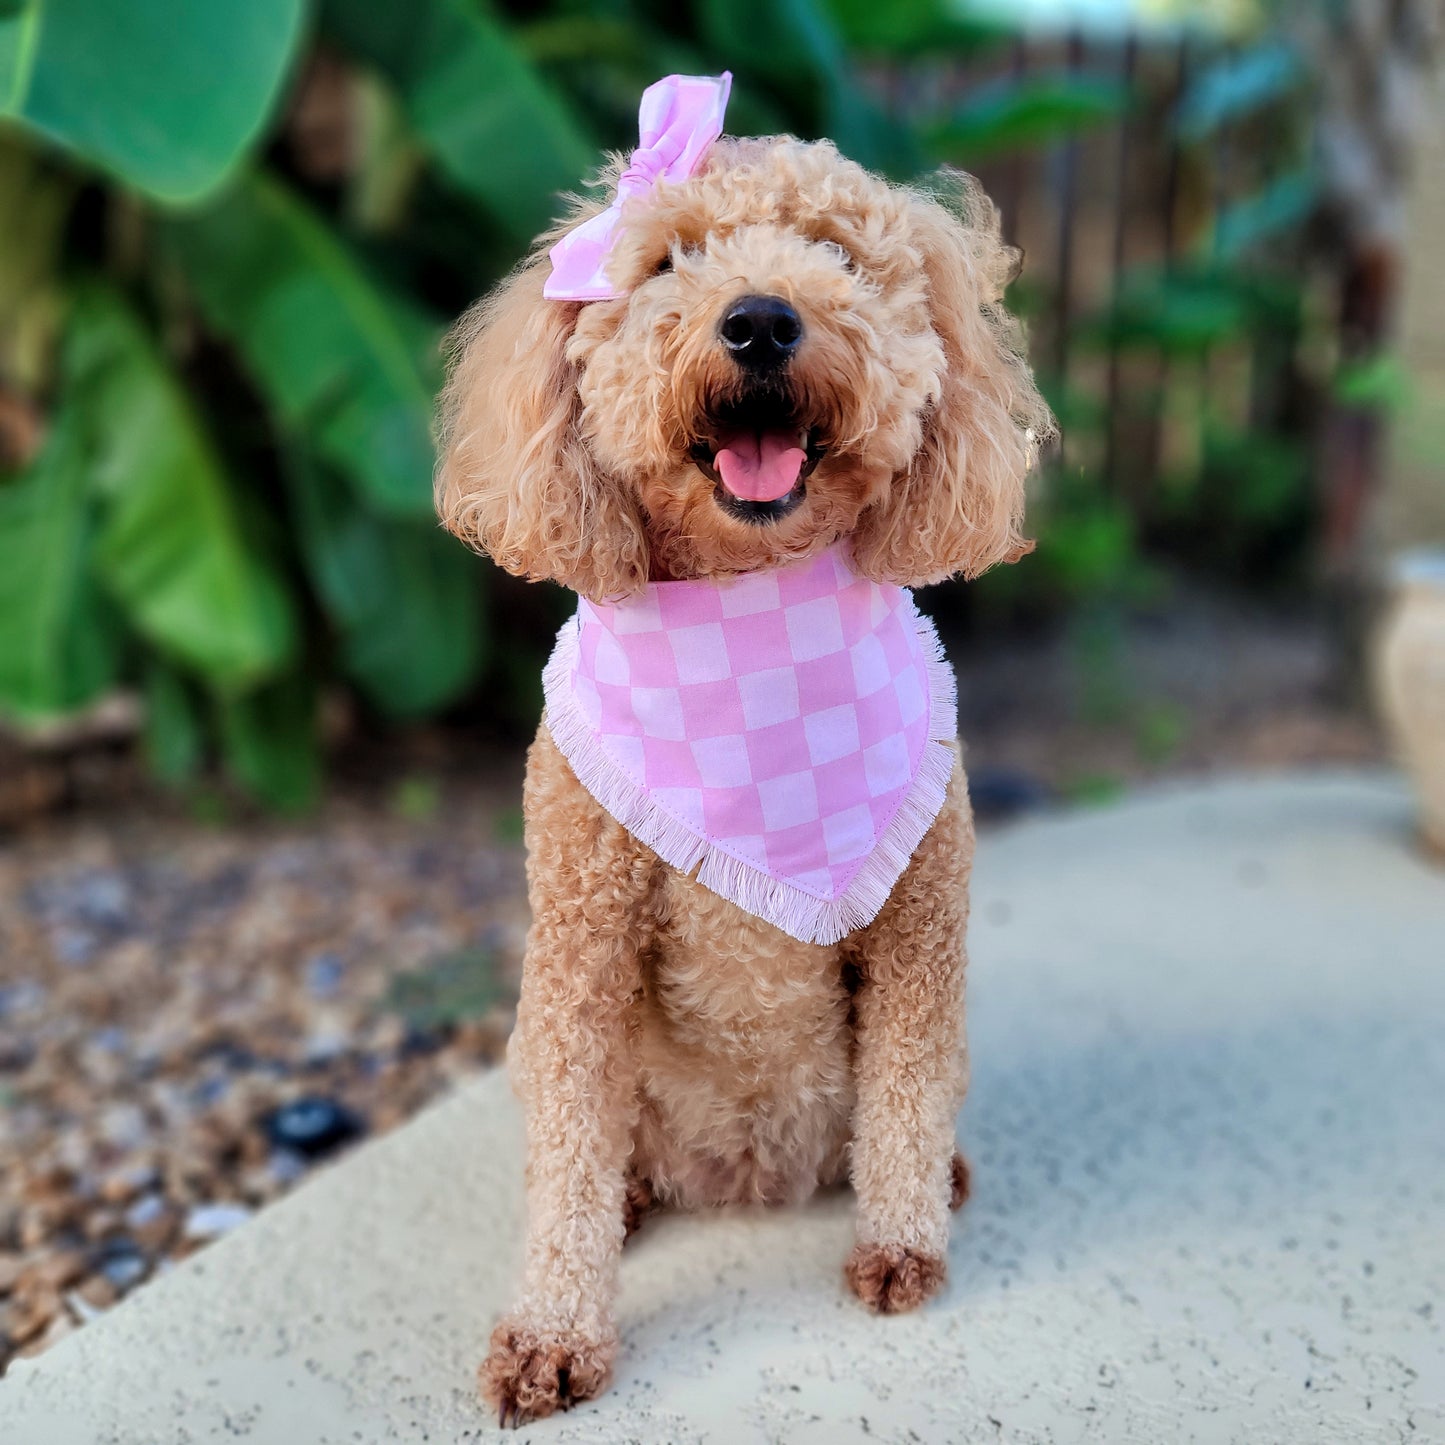 Pink Checkered - Reversible Snap On Dog Bandana - With Short Pink Fringe Trim